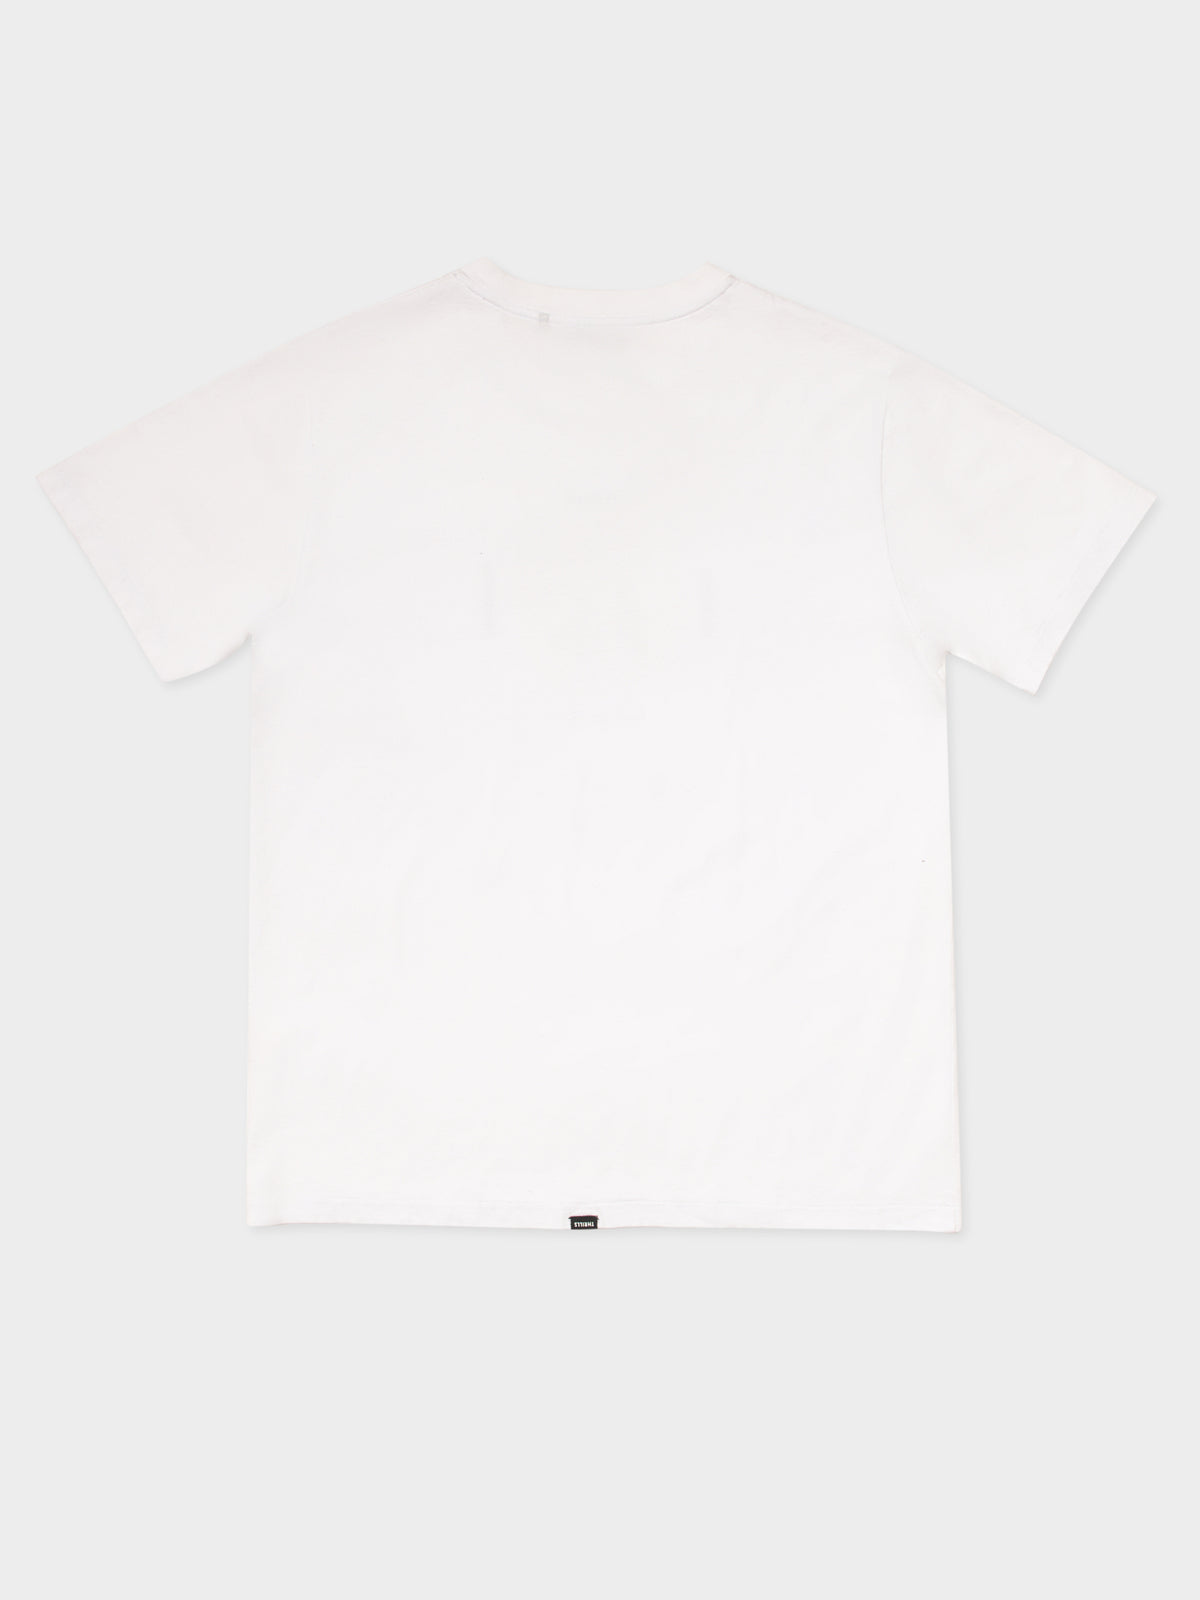 Modern Lover Merch Fit T-Shirt in White